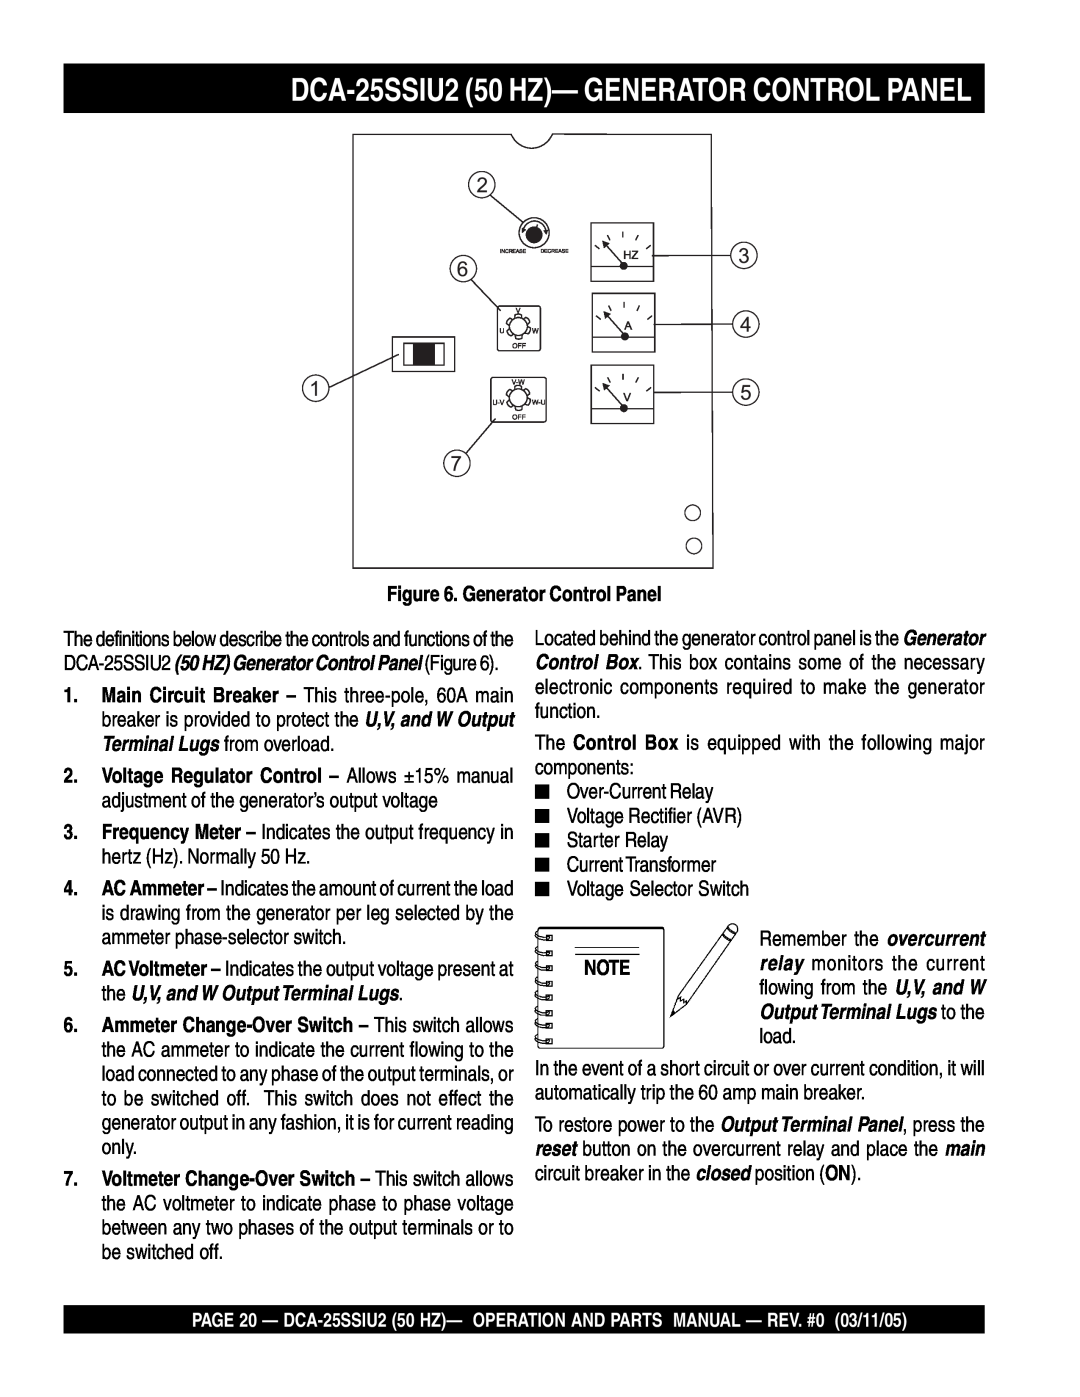 Multiquip operation manual DCA-25SSIU2 50 HZ- GENERATOR CONTROL PANEL, Generator Control Panel 